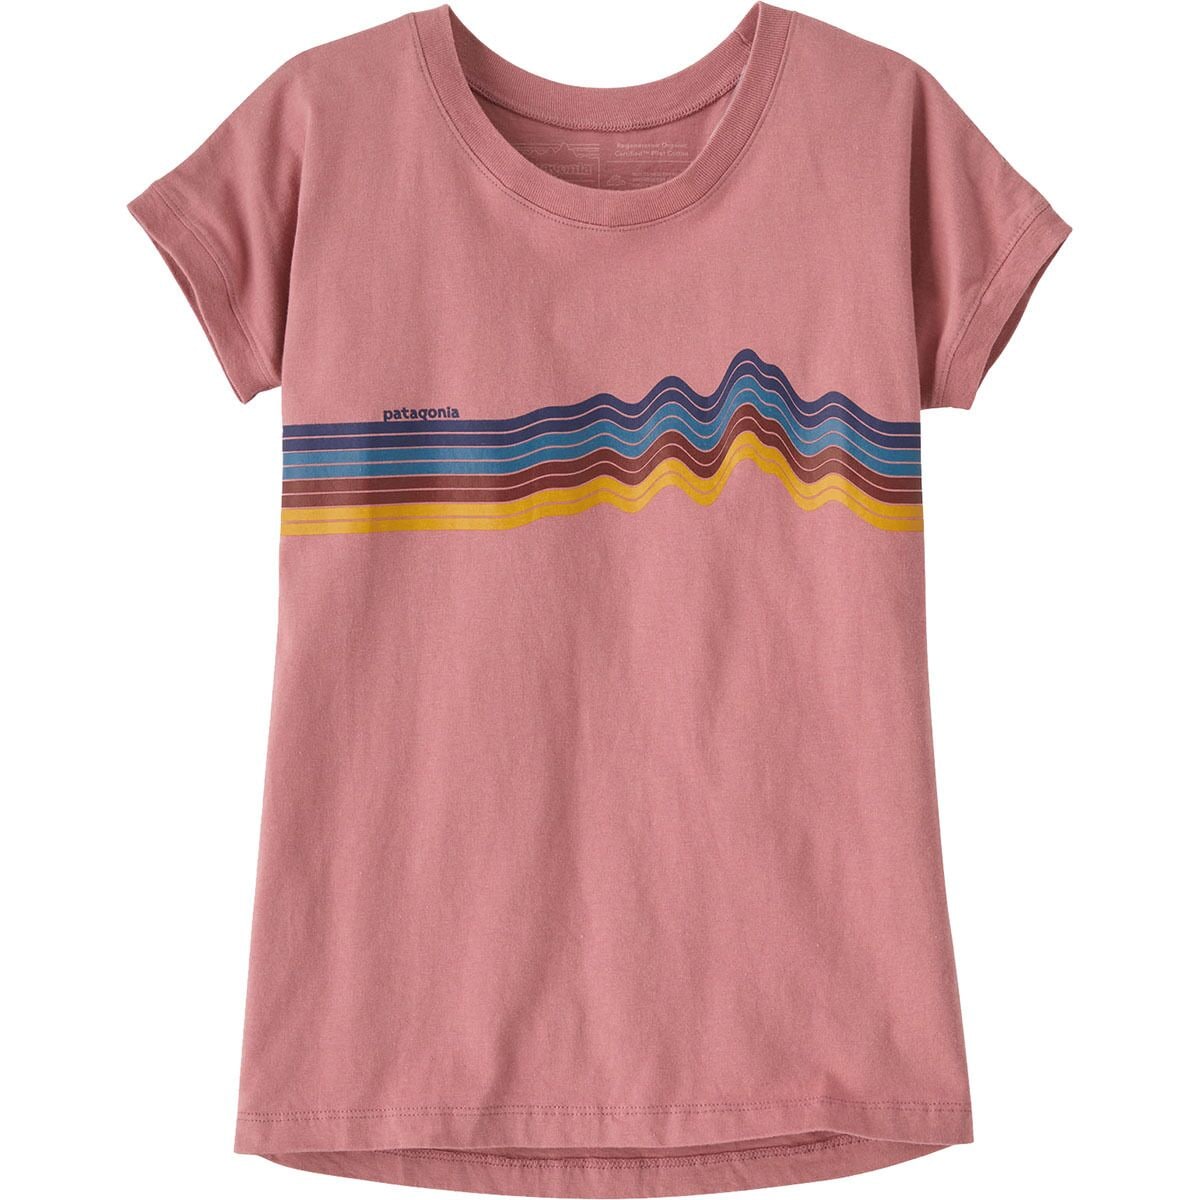 Patagonia Regenerative Graphic Short-Sleeve T-Shirt - Girls'